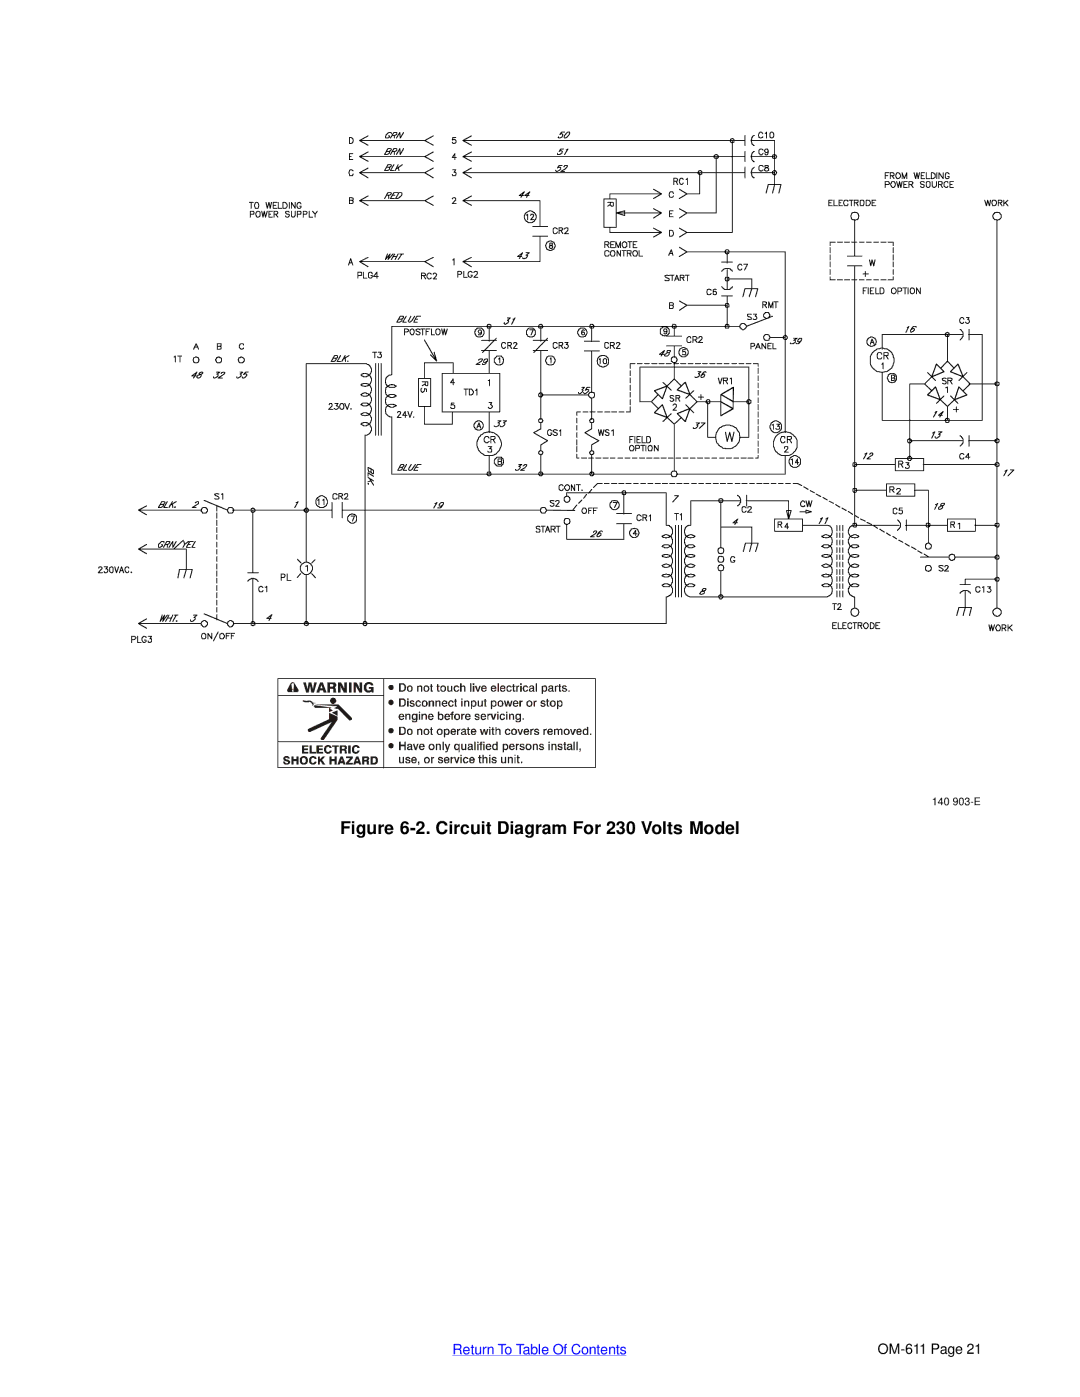 Miller Electric HF-251-2, HF-251D-1 manual Circuit Diagram For 230 Volts Model 